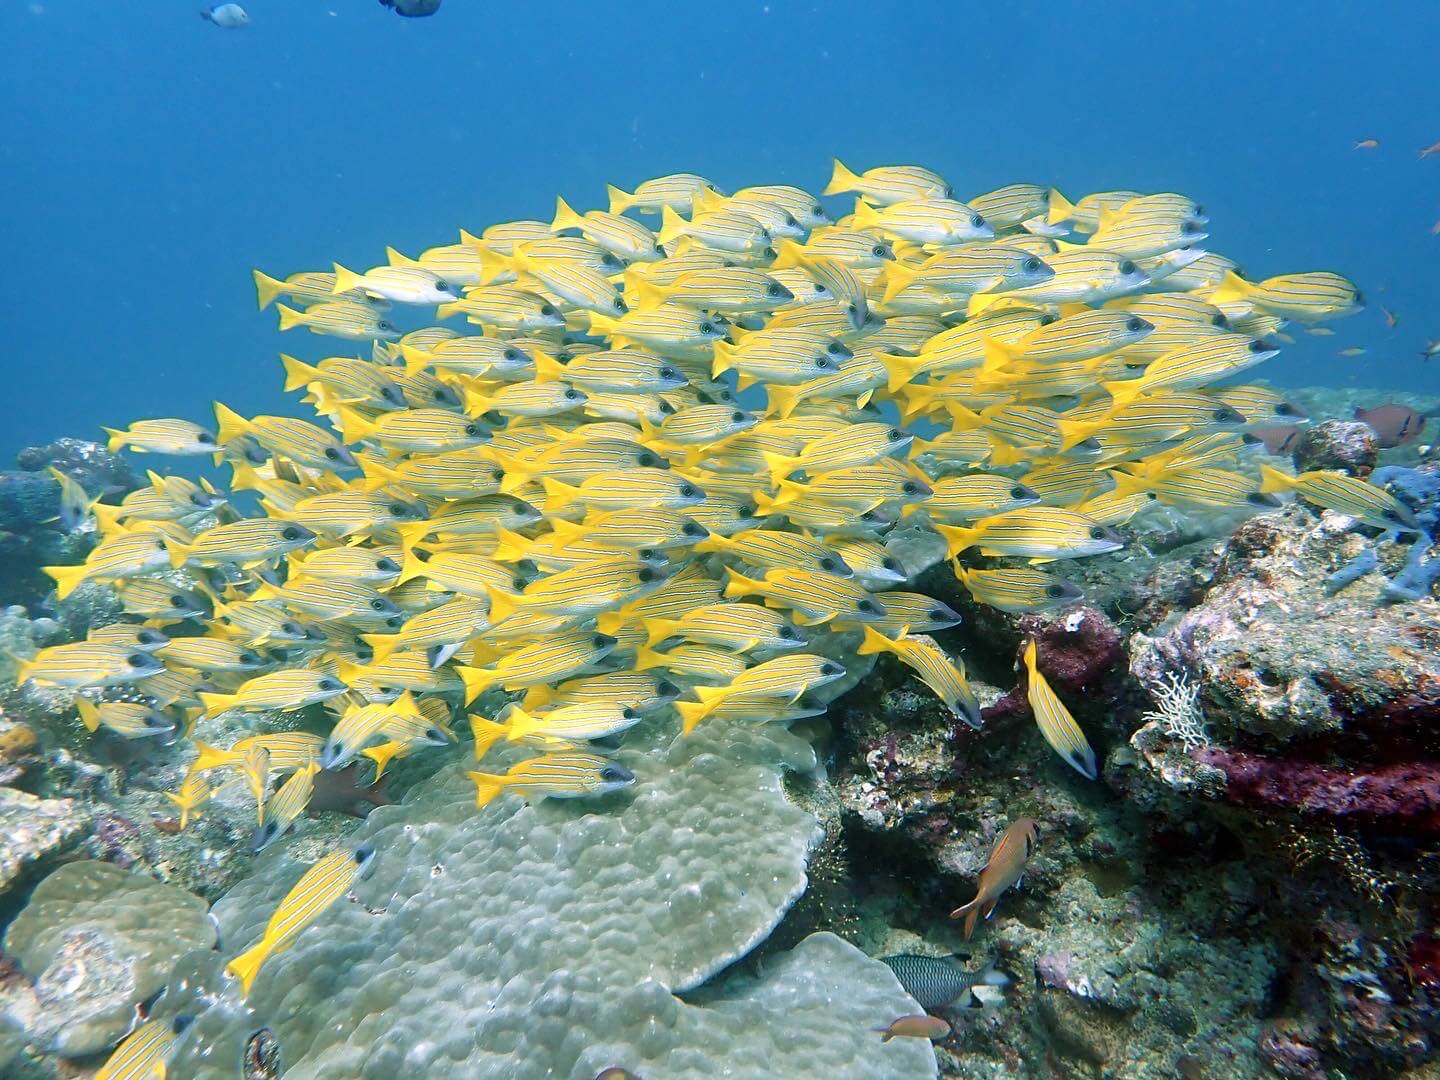 A School Of Yellow Fish